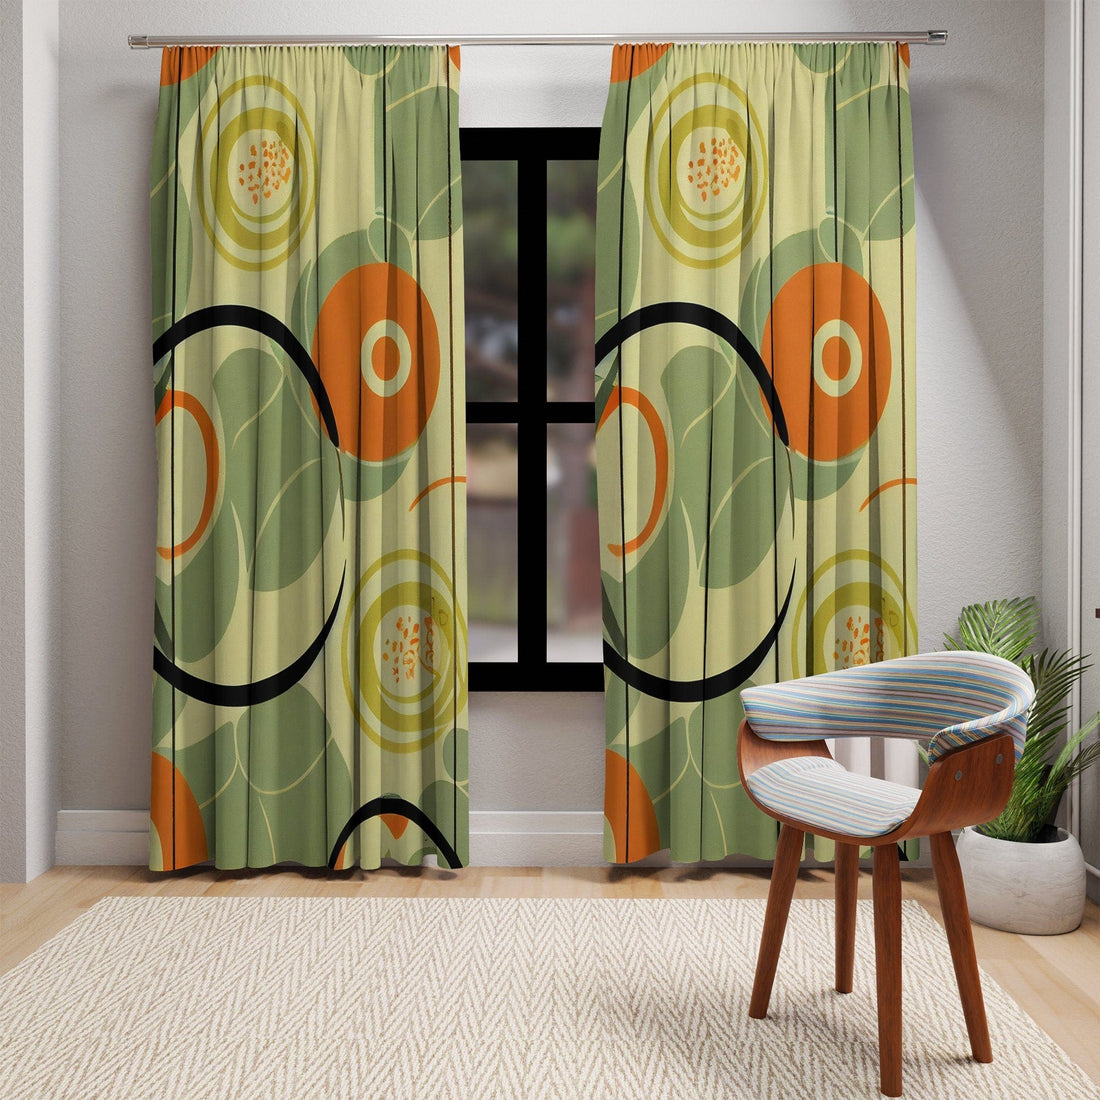 Kate McEnroe New York 1970s Geometric Abstract Curtains, Burnt Orange and Green Mid Century Style Living Room, Bedroom Decor - KM13879923Window CurtainsW3S - ORA - GRA - SH3